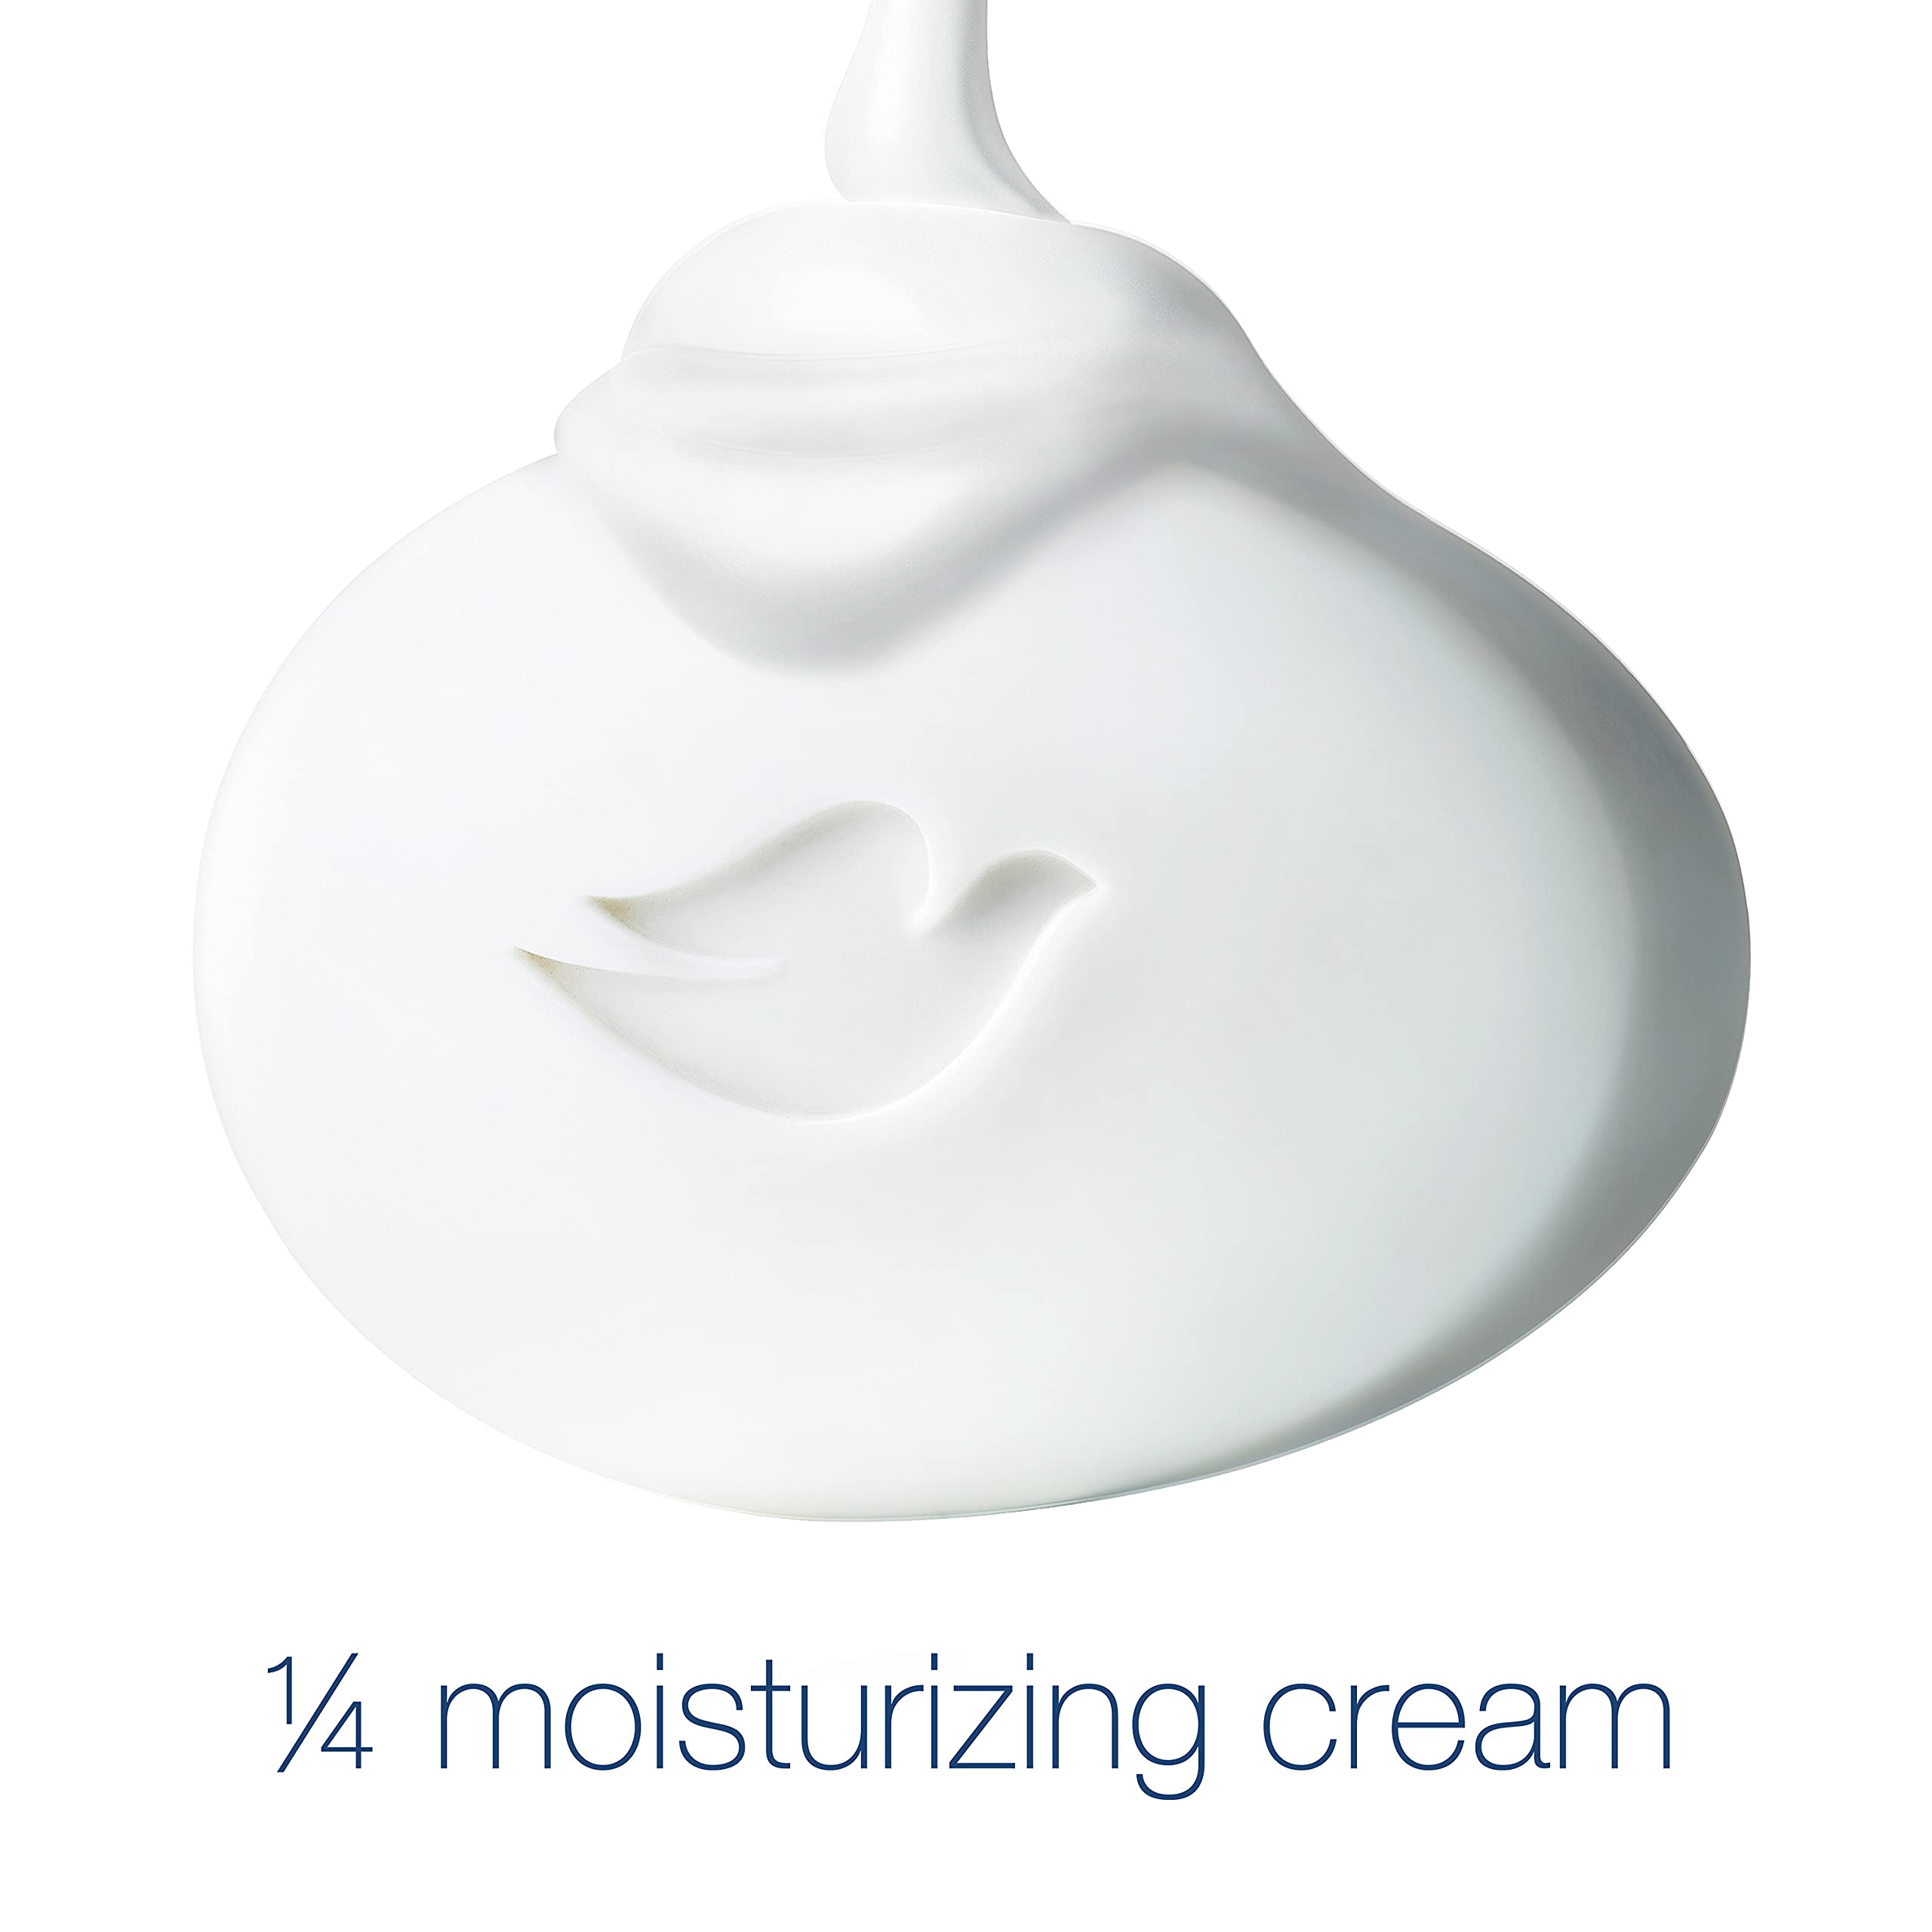 Dove Beauty Bar Gentle Skin Cleanser Moisturizing for Gentle Soft Skin Care Original Made With 1/4 Moisturizing Cream 3.75 oz, 8 Bars